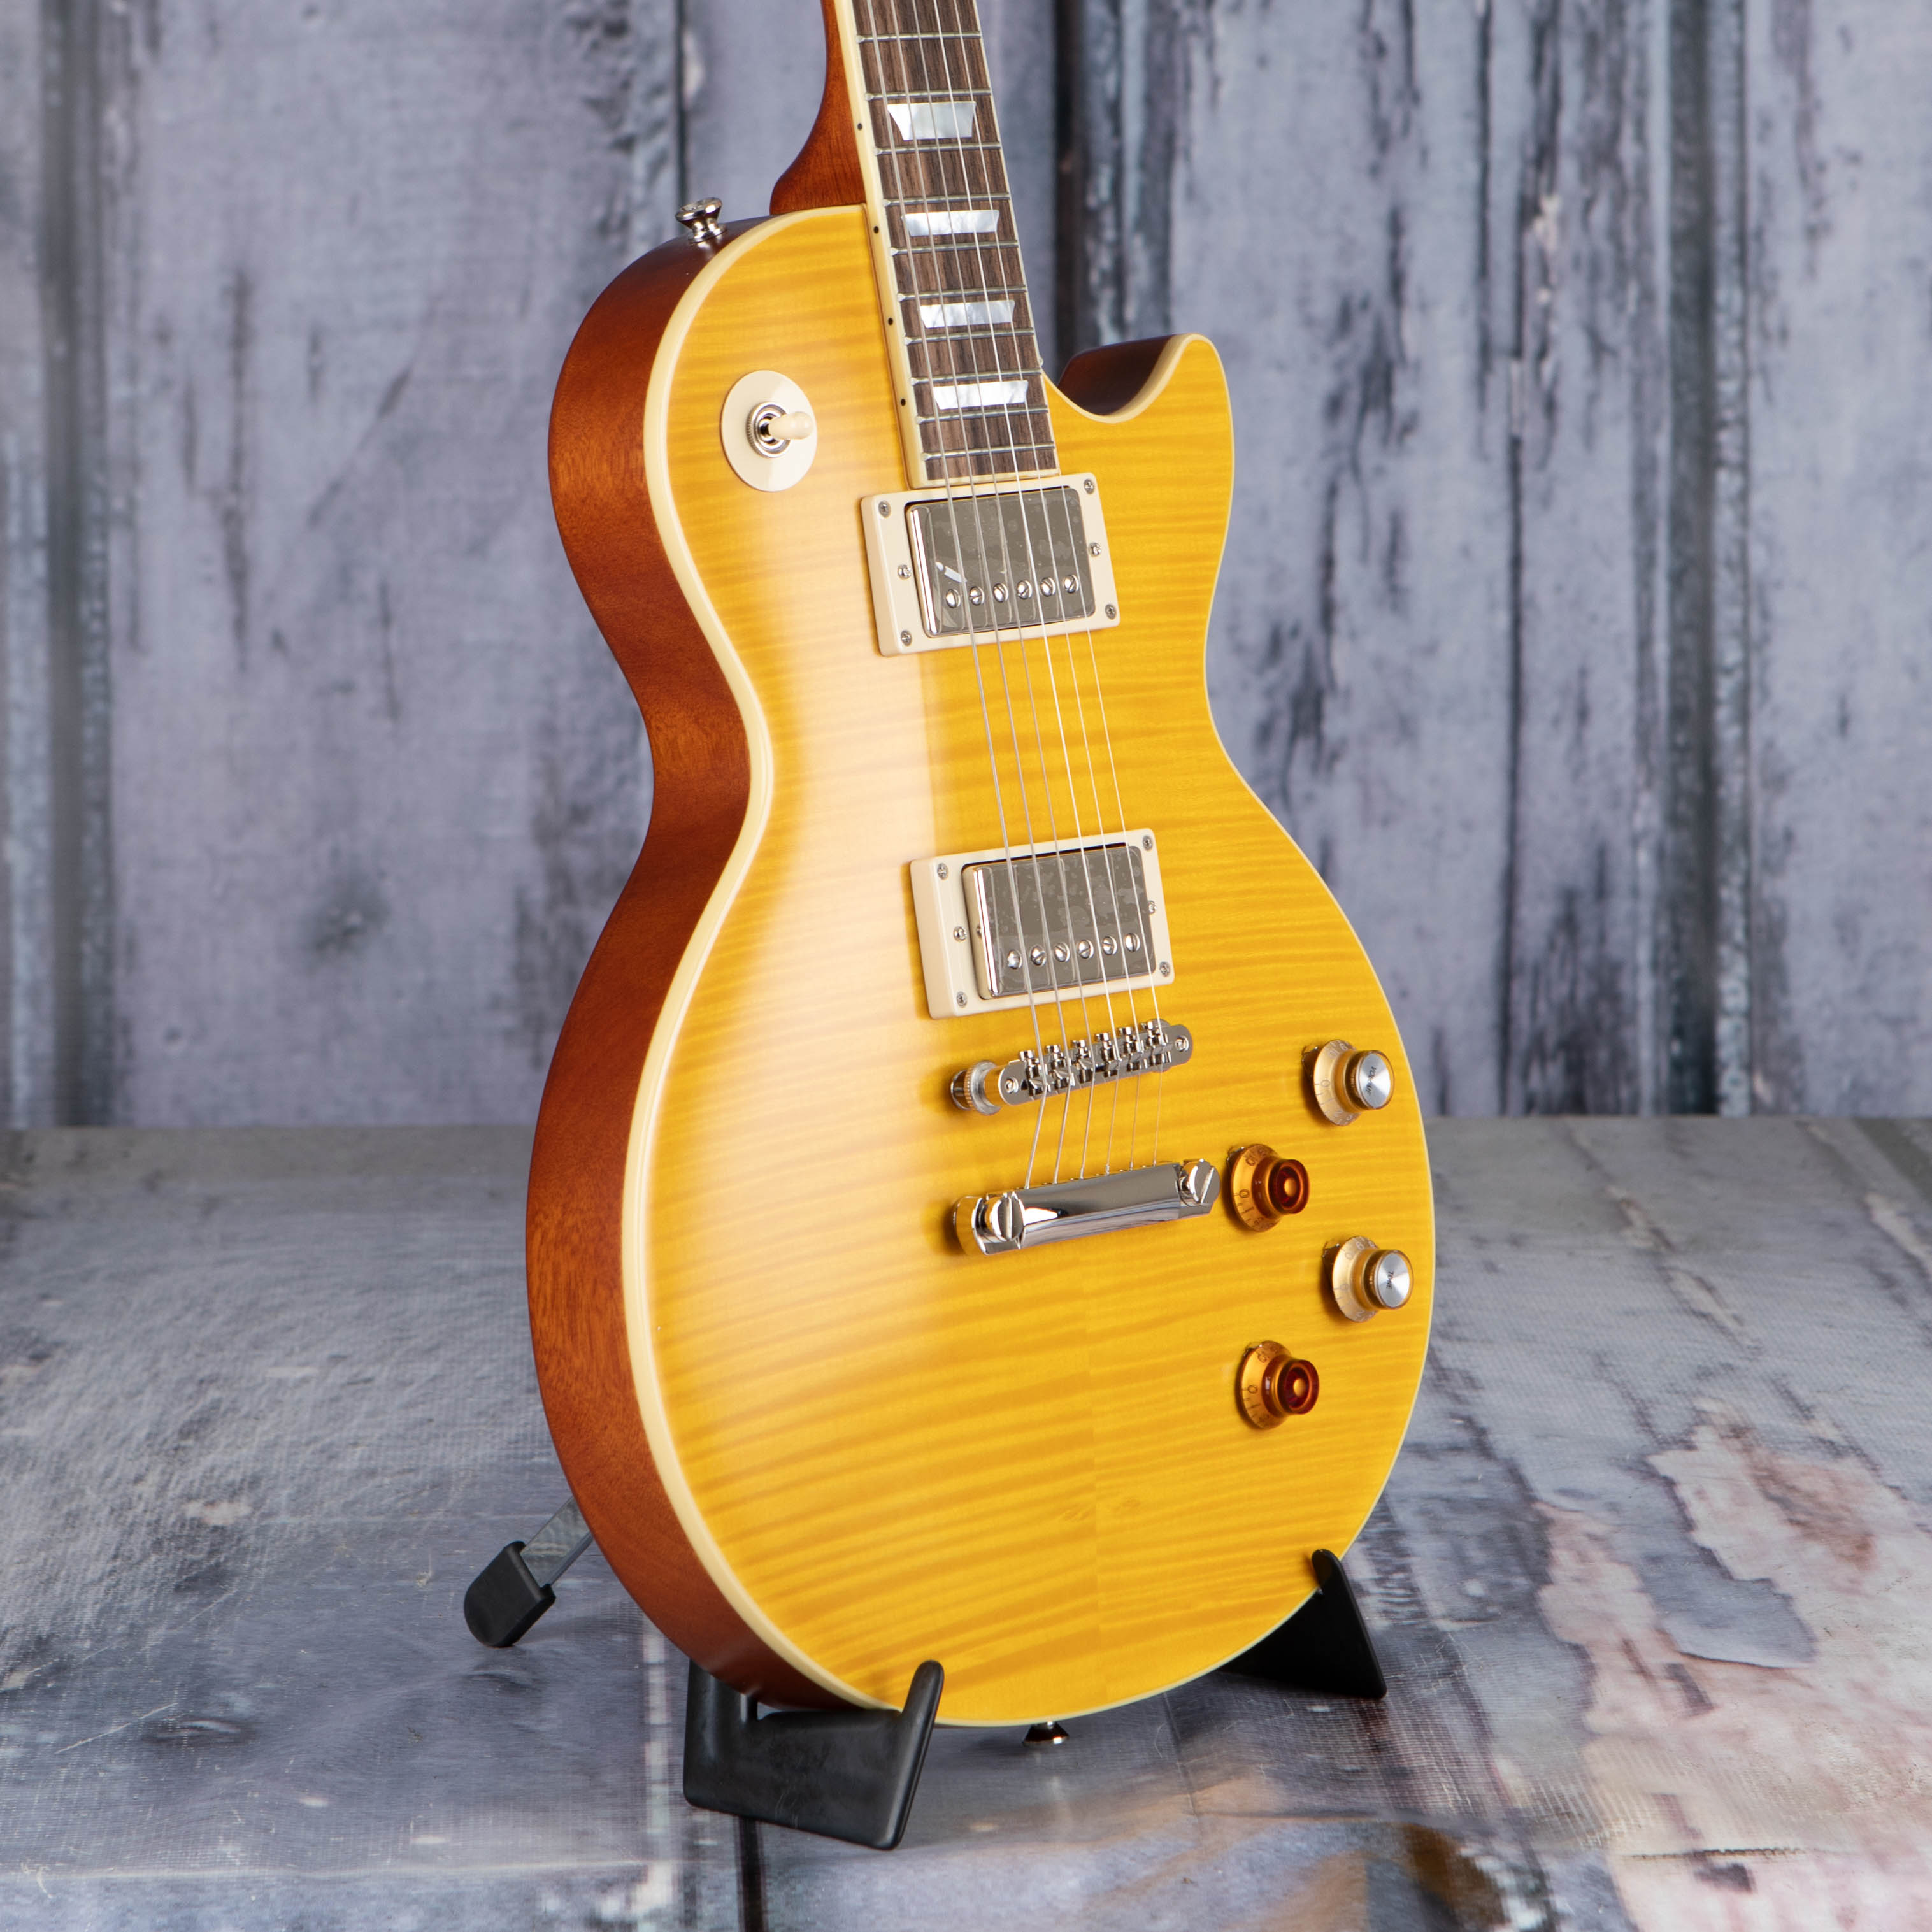 Epiphone Kirk Hammett Greeny 1959 Les Paul Standard Electric Guitar, Greeny Burst, angle